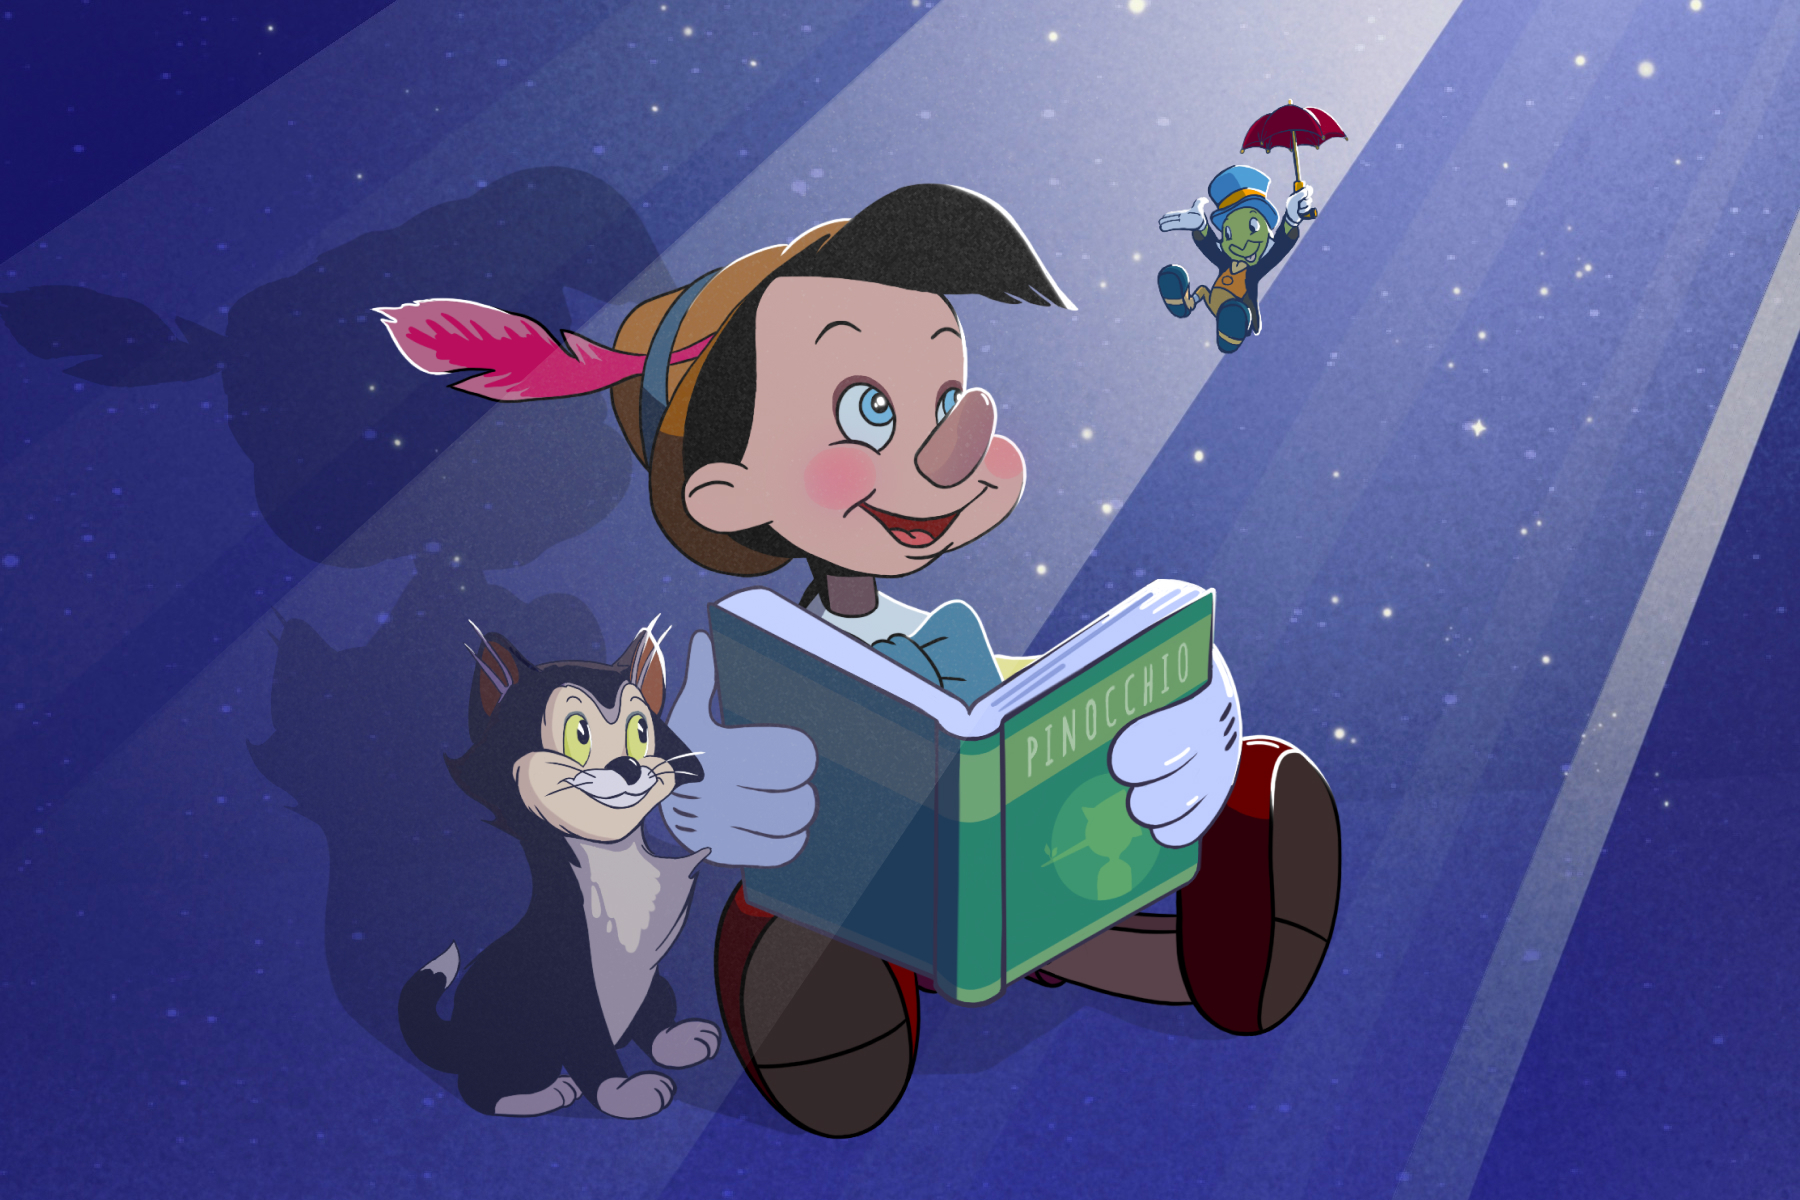 Pinocchio in Disney's Animated Adaptation